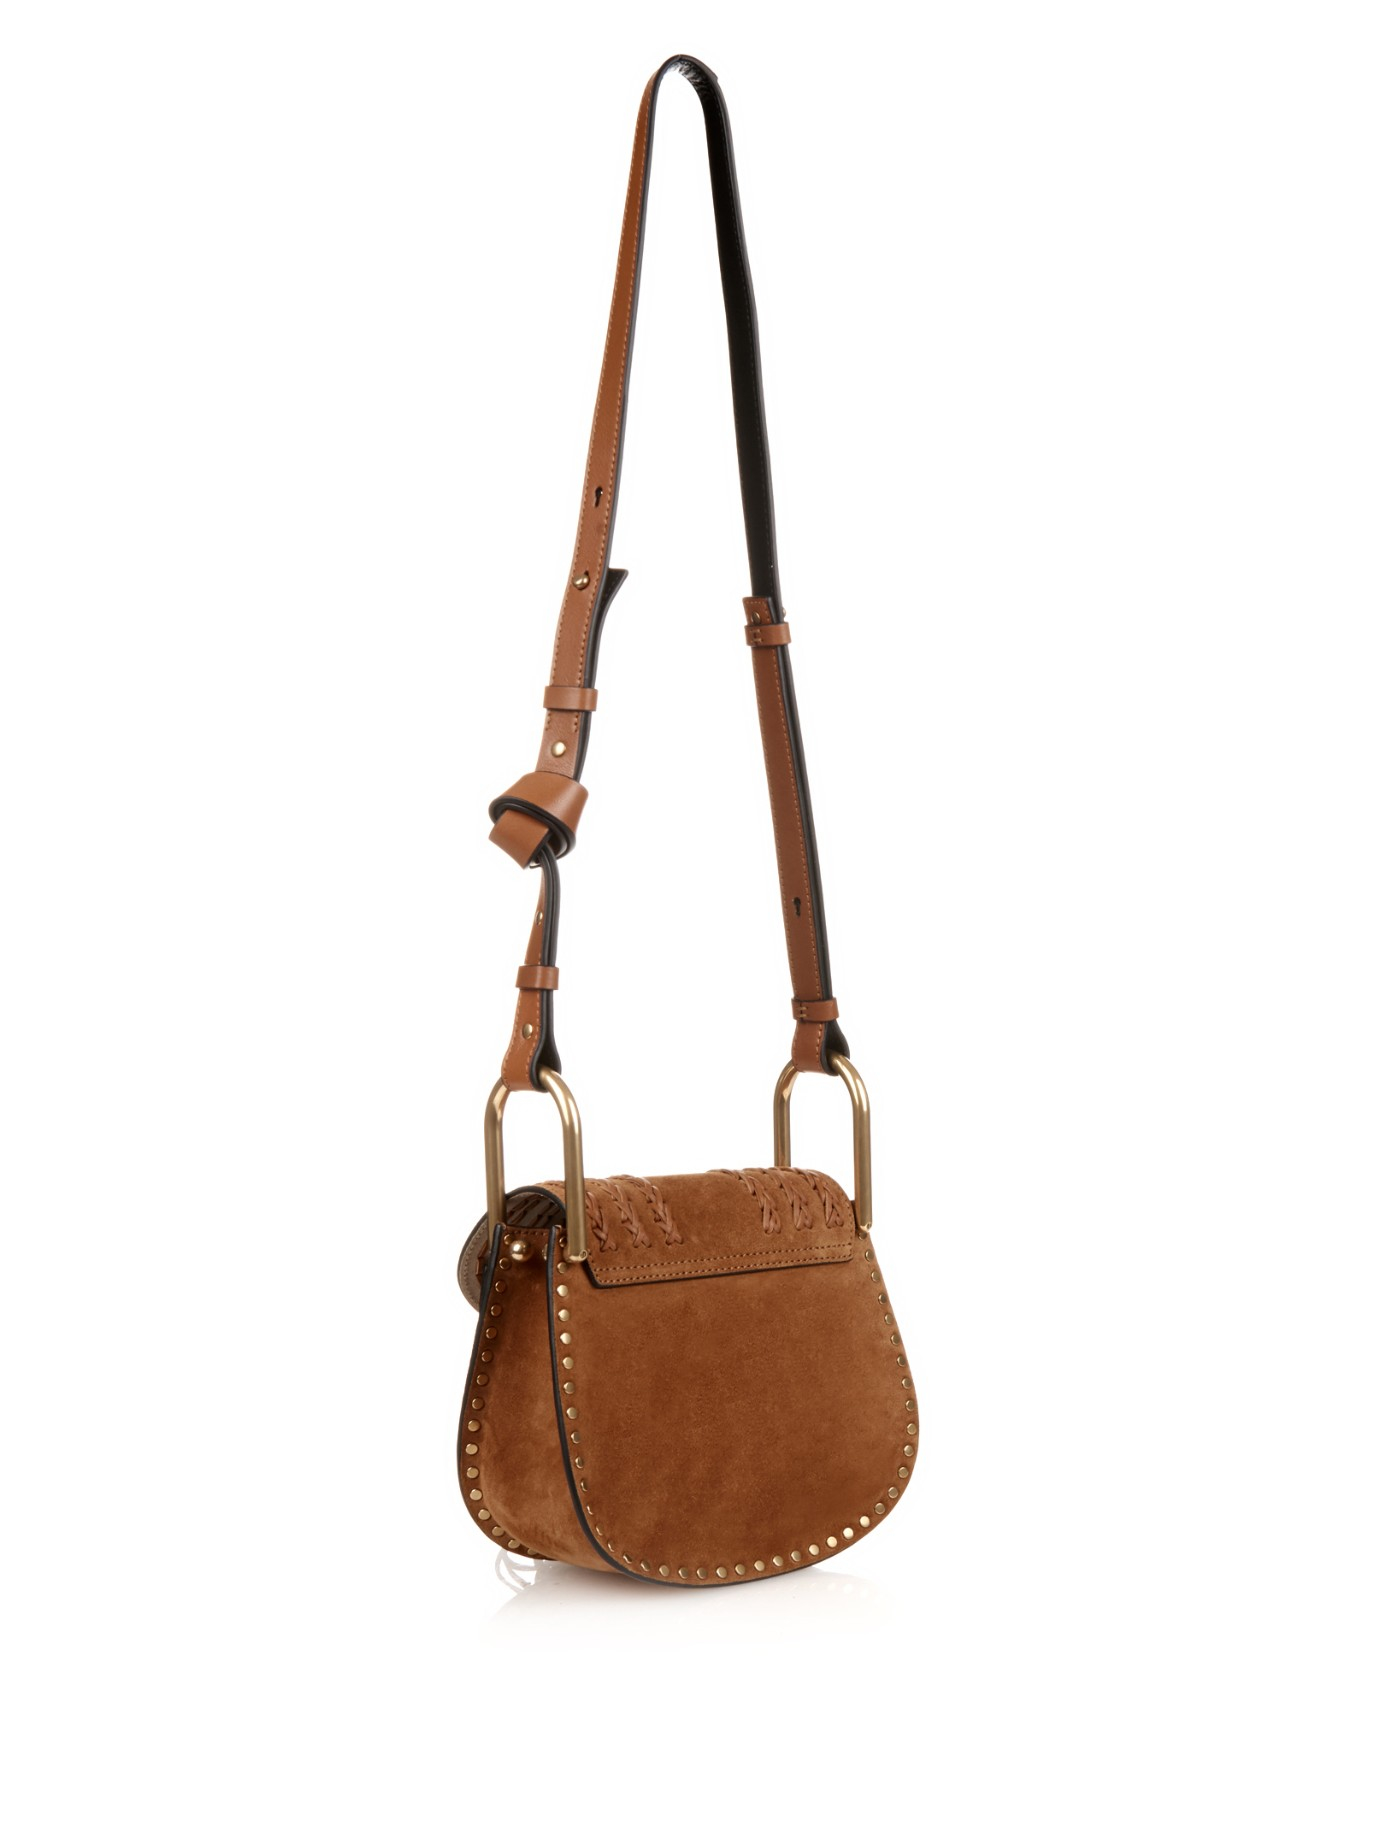 Lyst - Chloé Hudson Mini Suede Cross-Body Bag in Brown